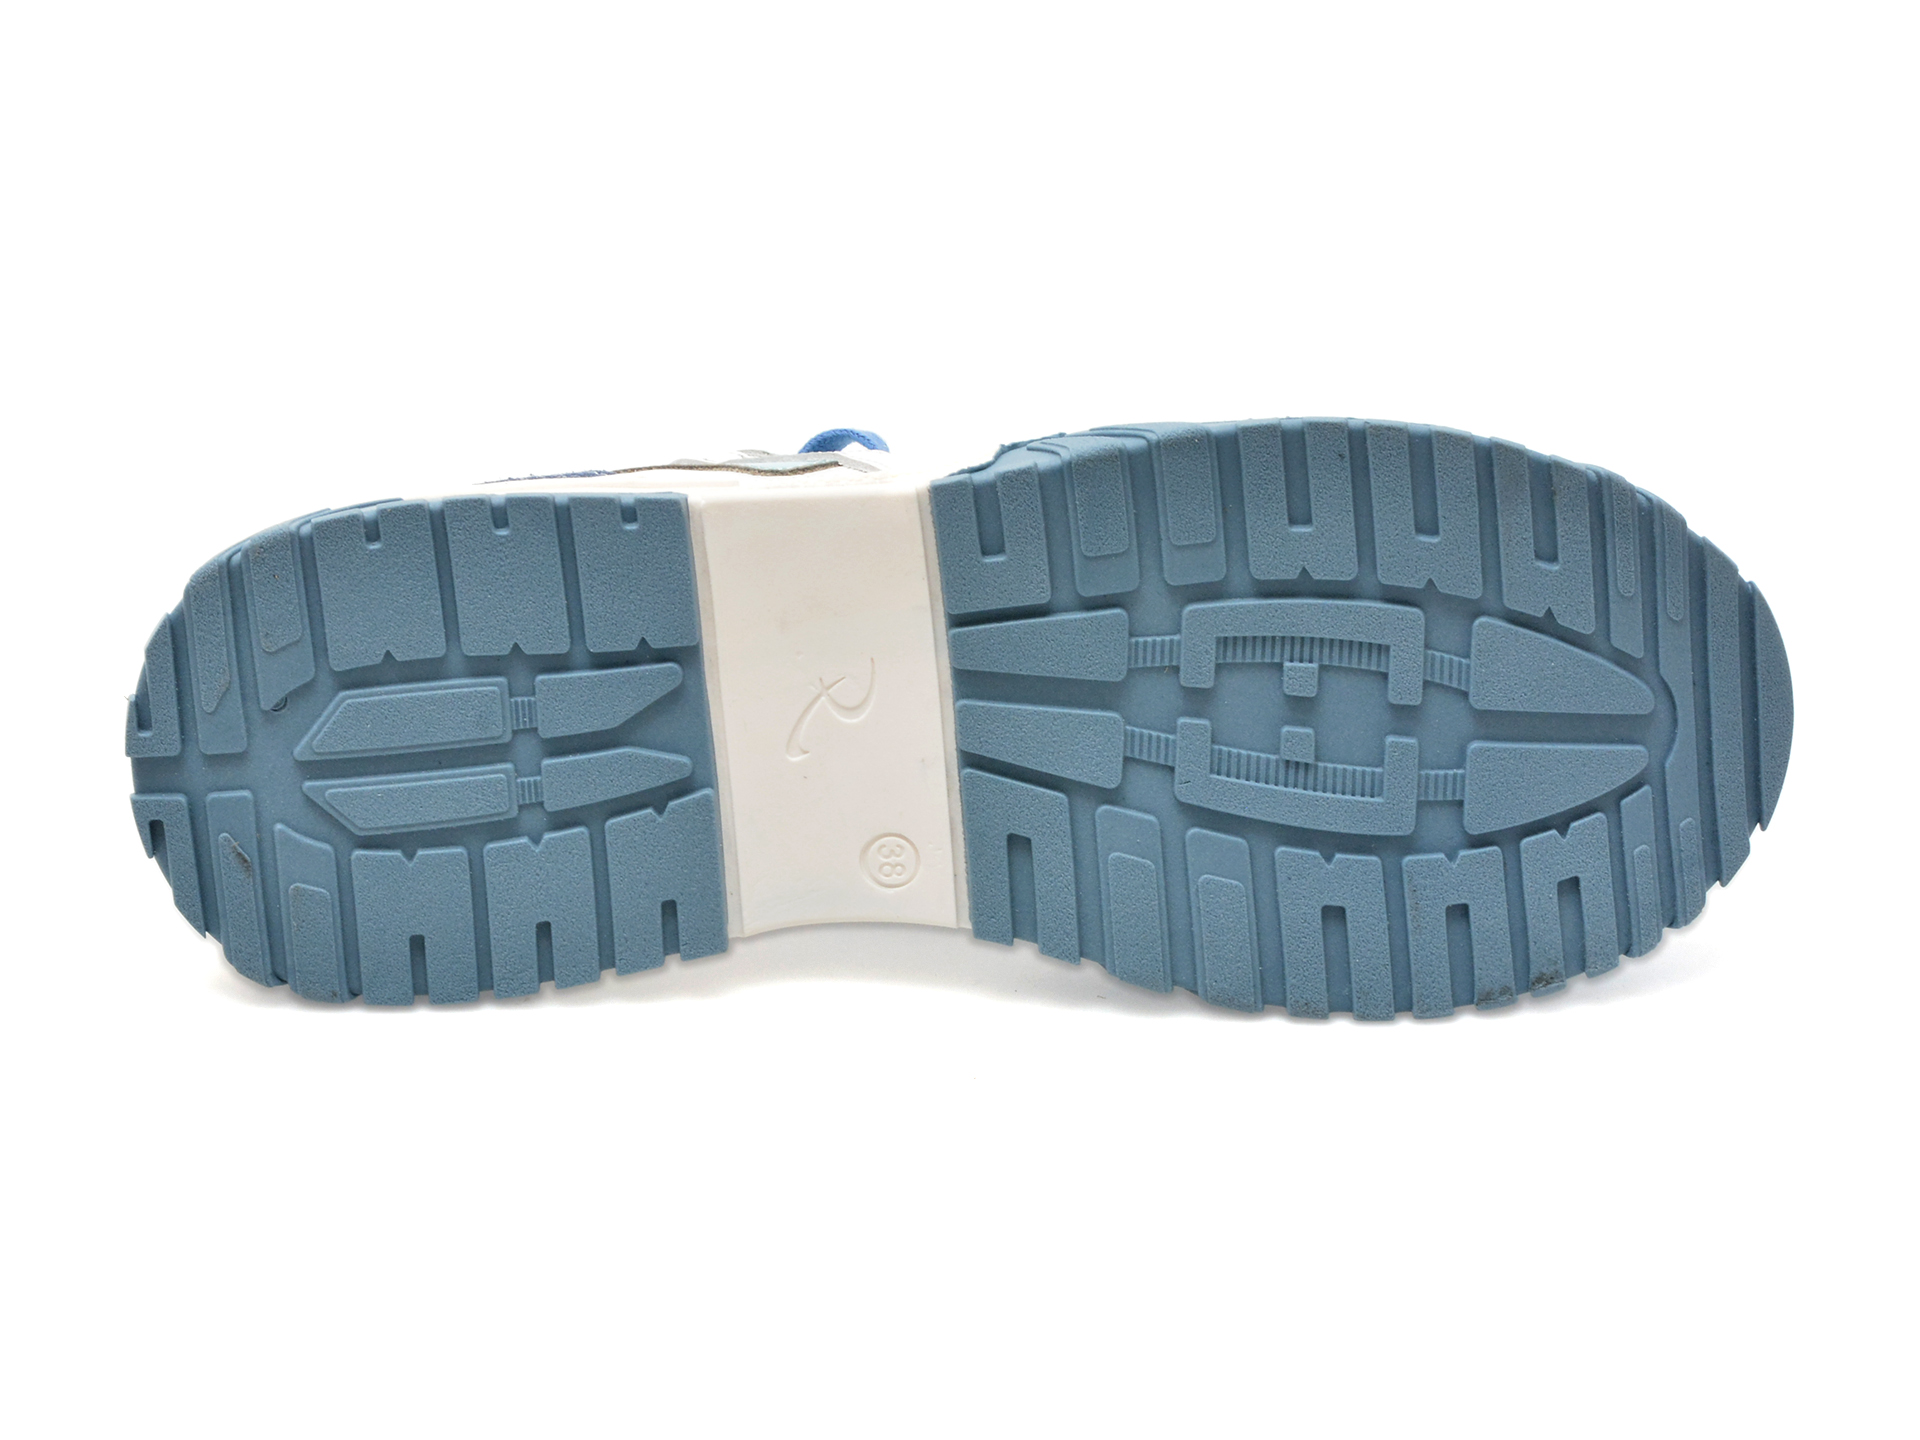 Pantofi DONNA CRIS albastri, 8513, din piele naturala